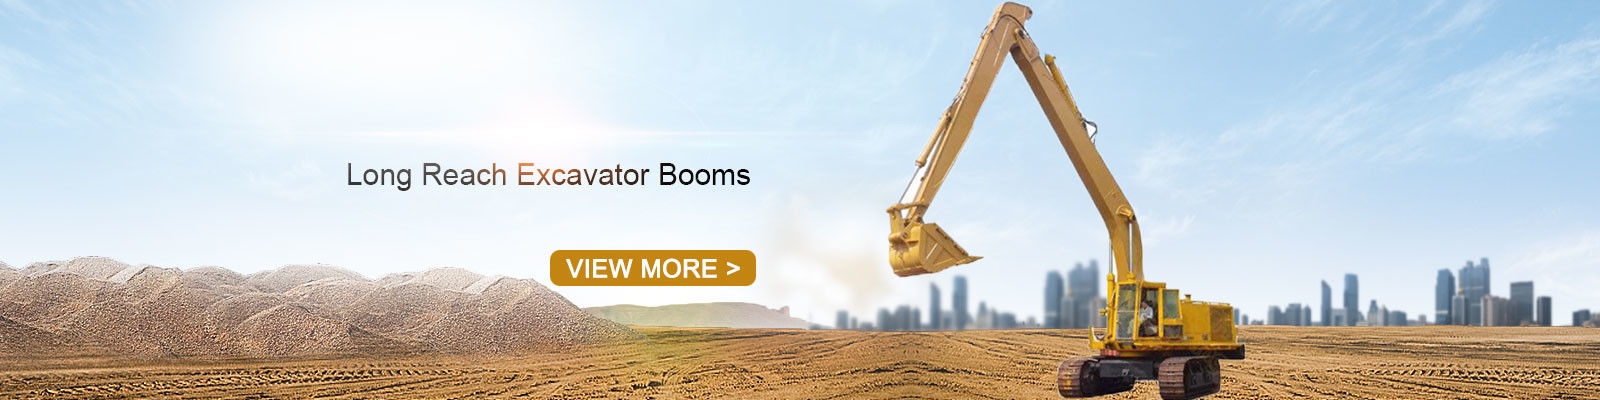 Long Reach Excavator Booms